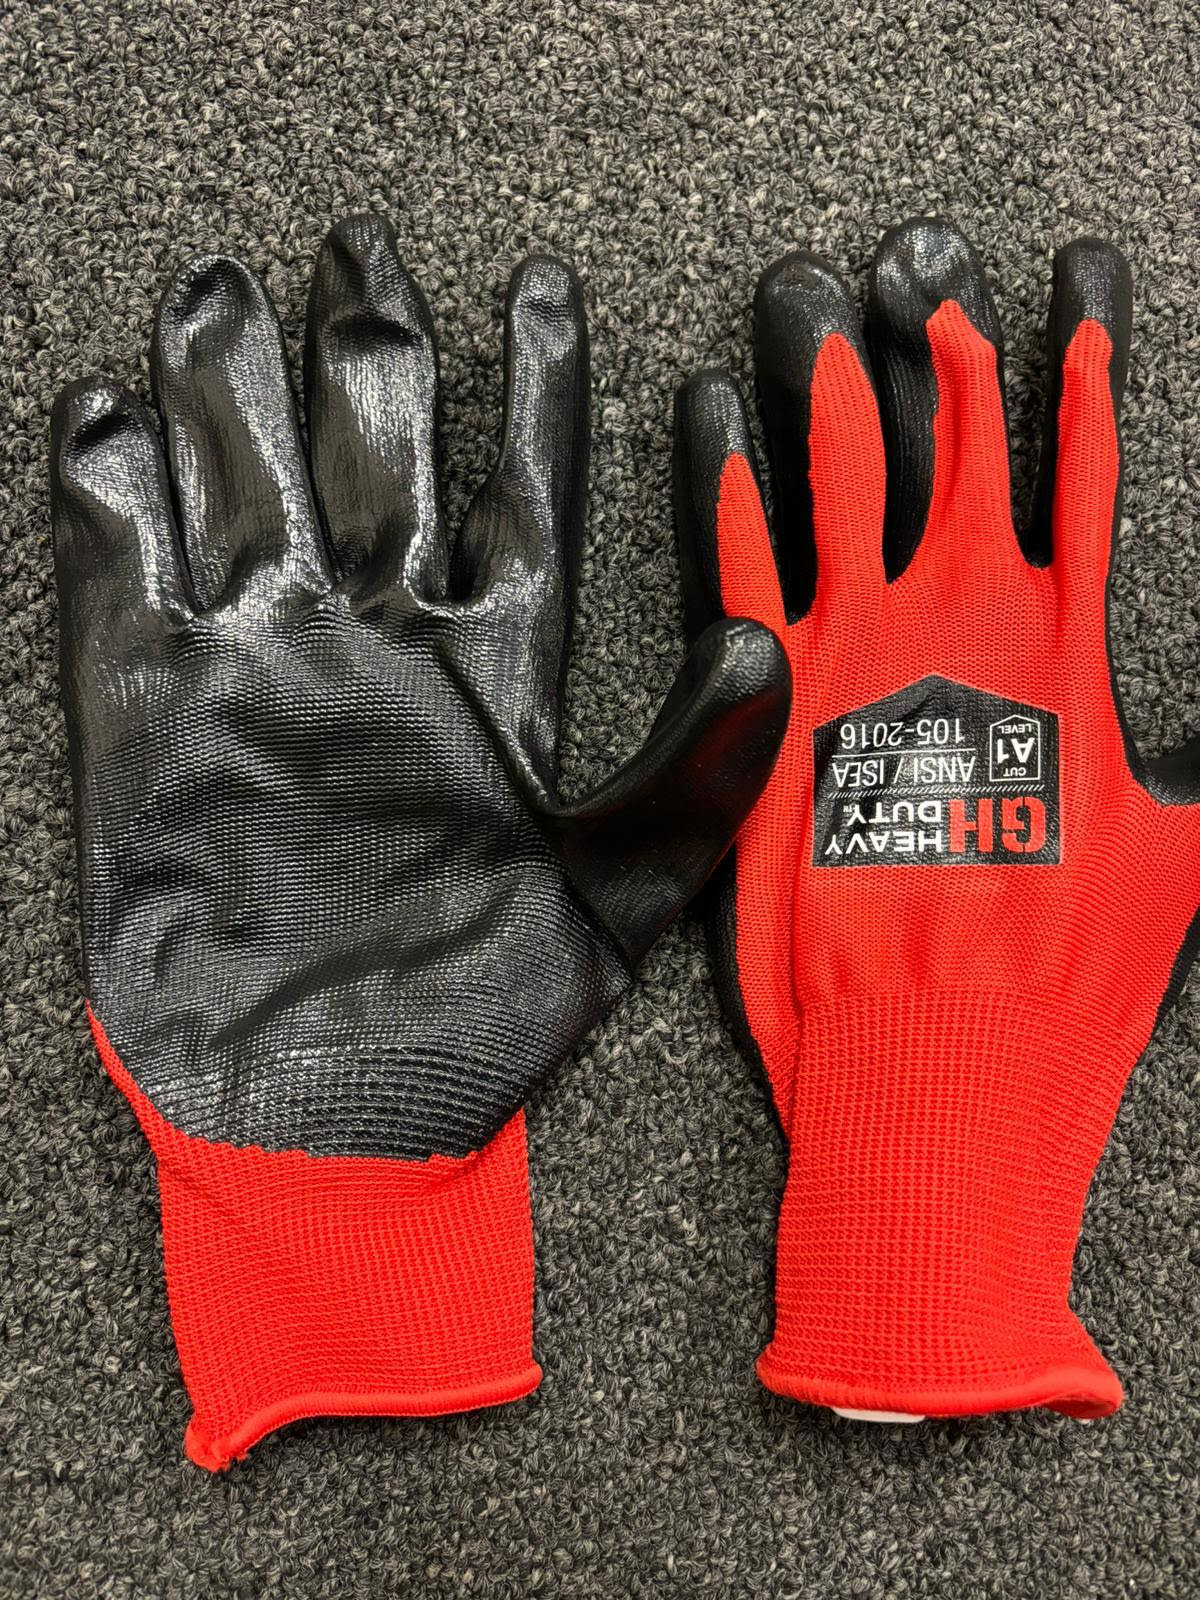 GH Heavy Duty Nitrile Reusable Work Gloves. 50000 Pairs. 